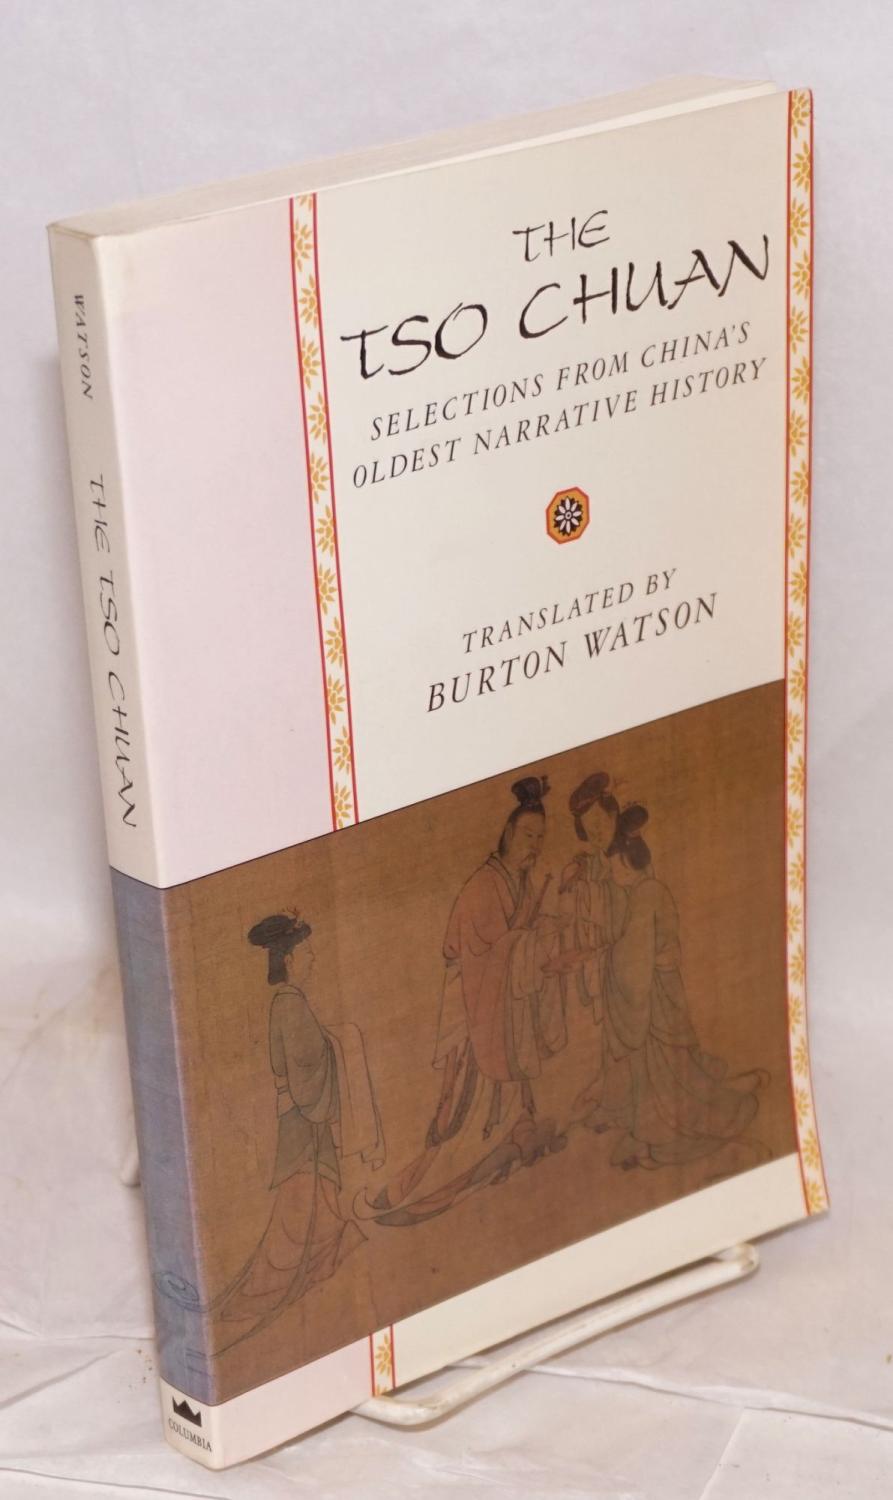 The Tso chuan selections from China's oldest narrative history - Watson, Burton; translator